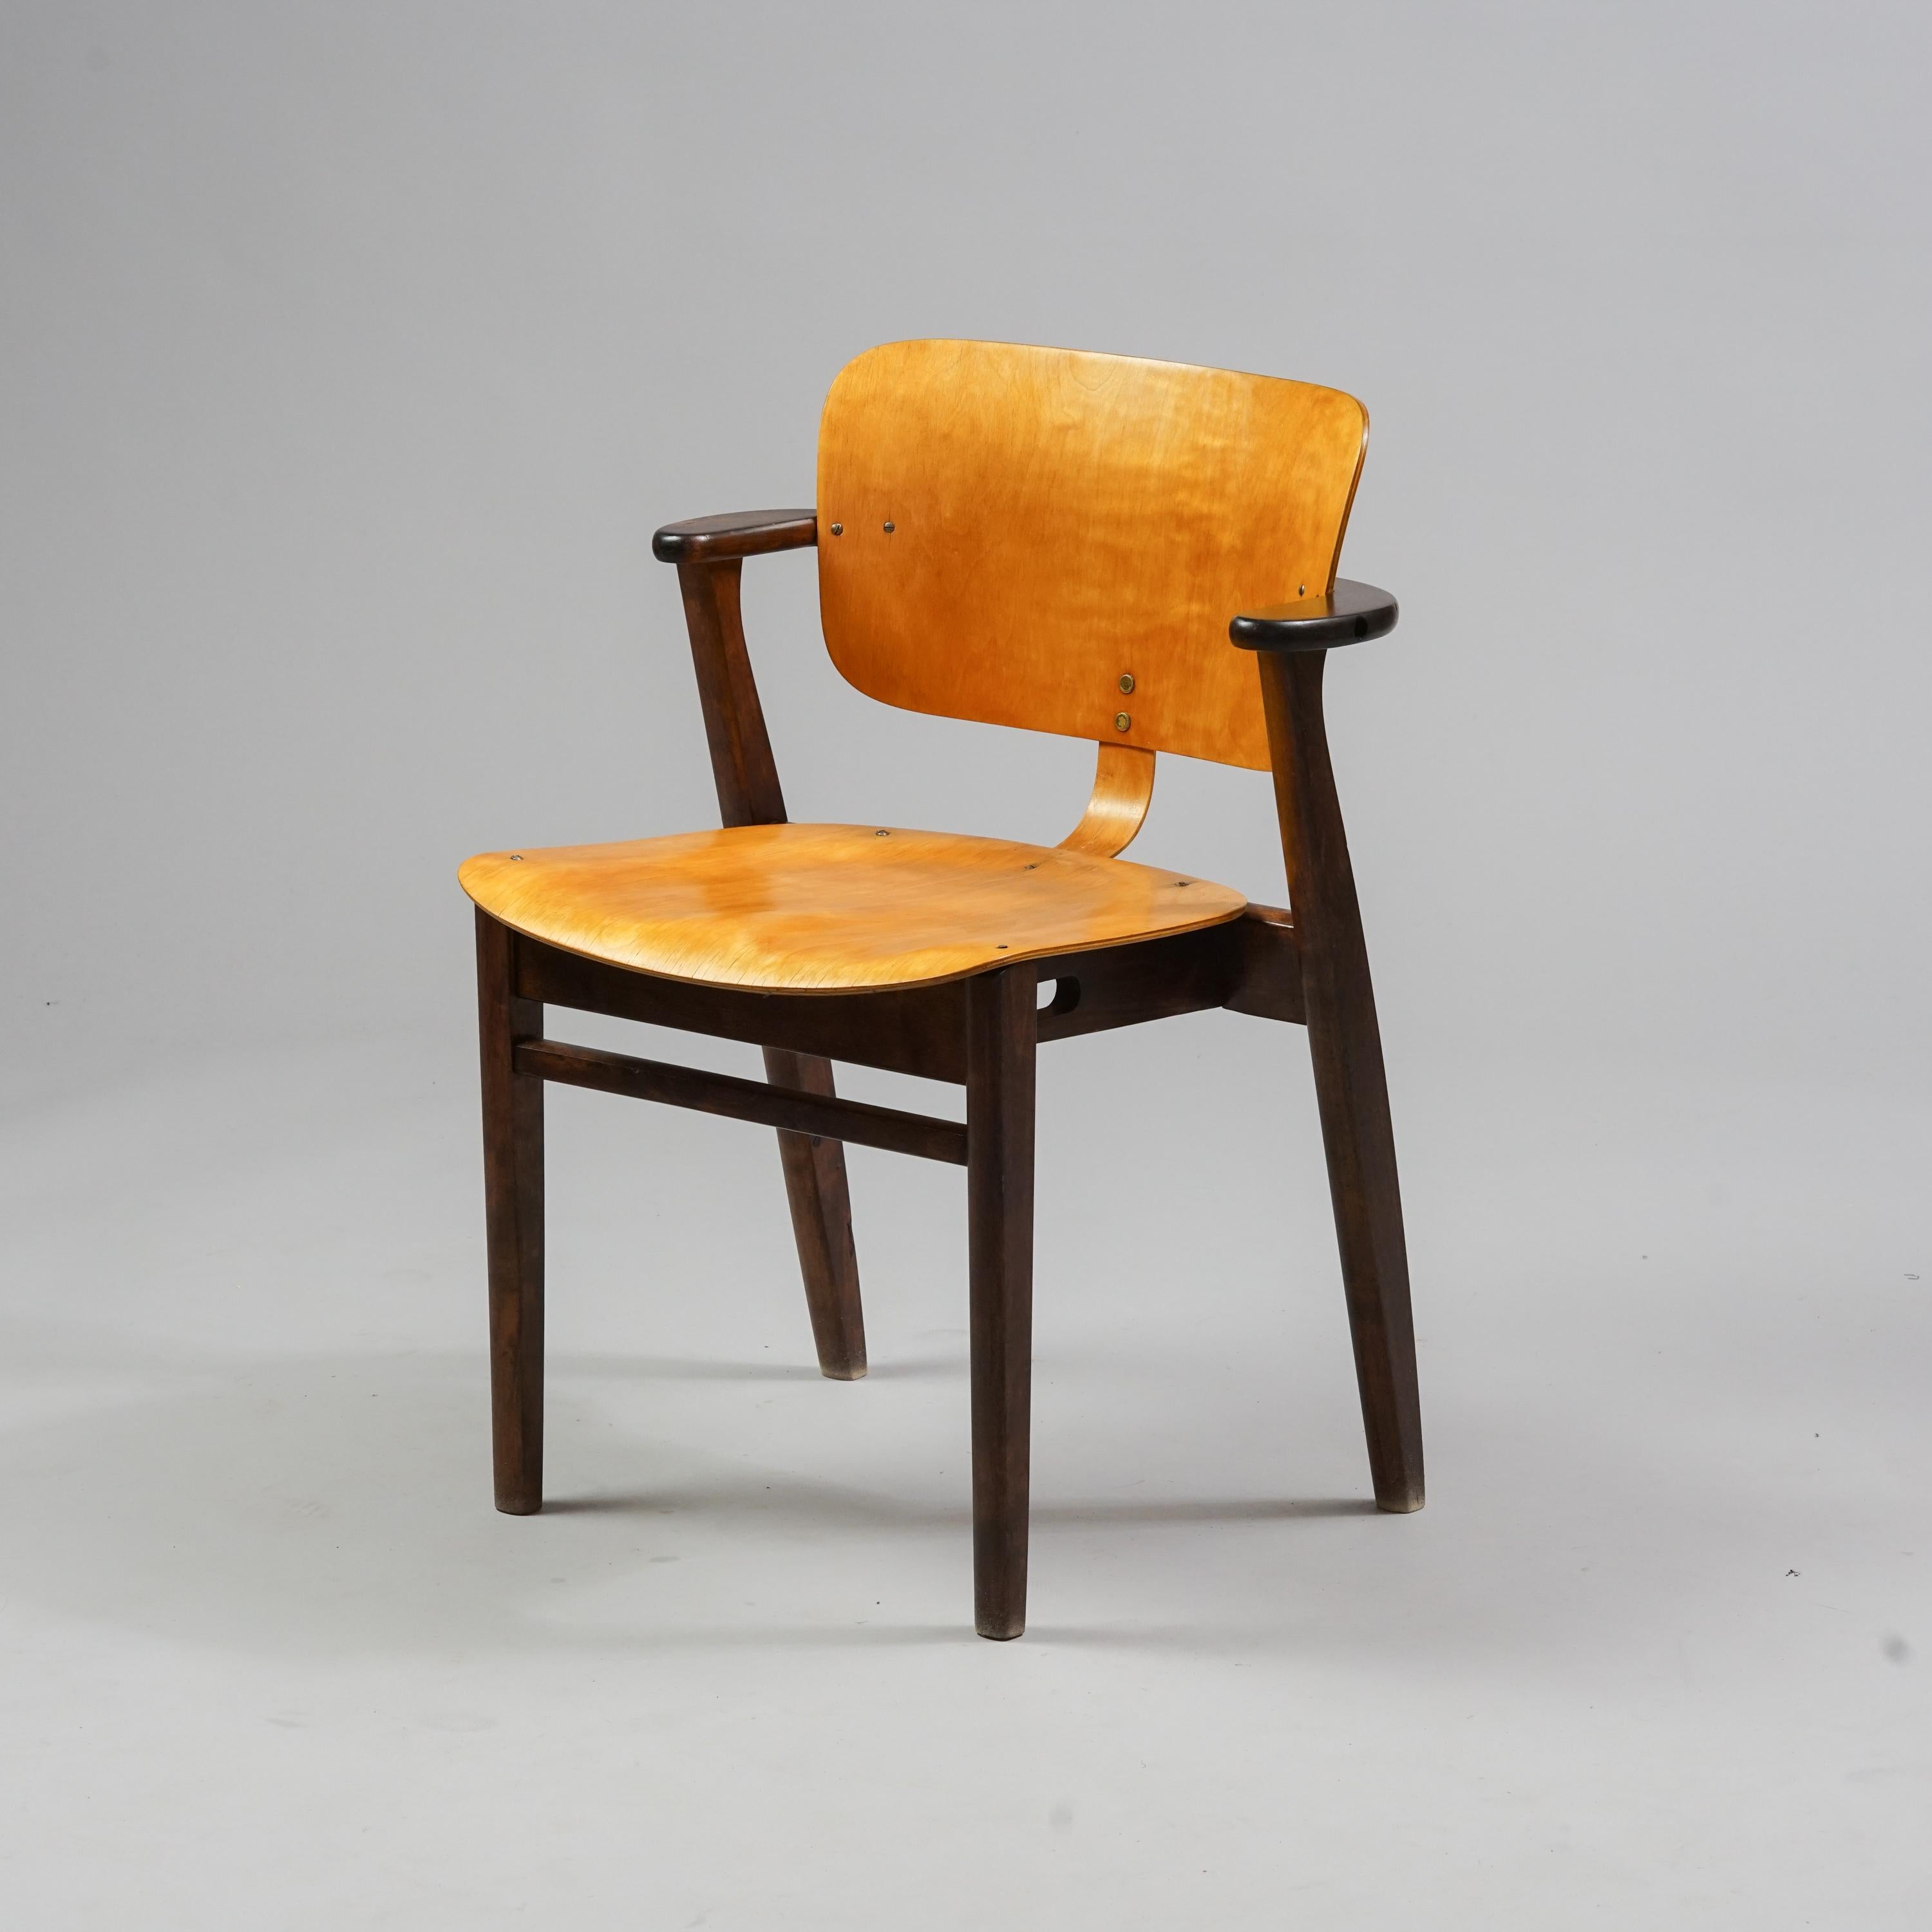 Scandinavian Modern Model Domus Chair by Ilmari Tapiovaara from the 1950s